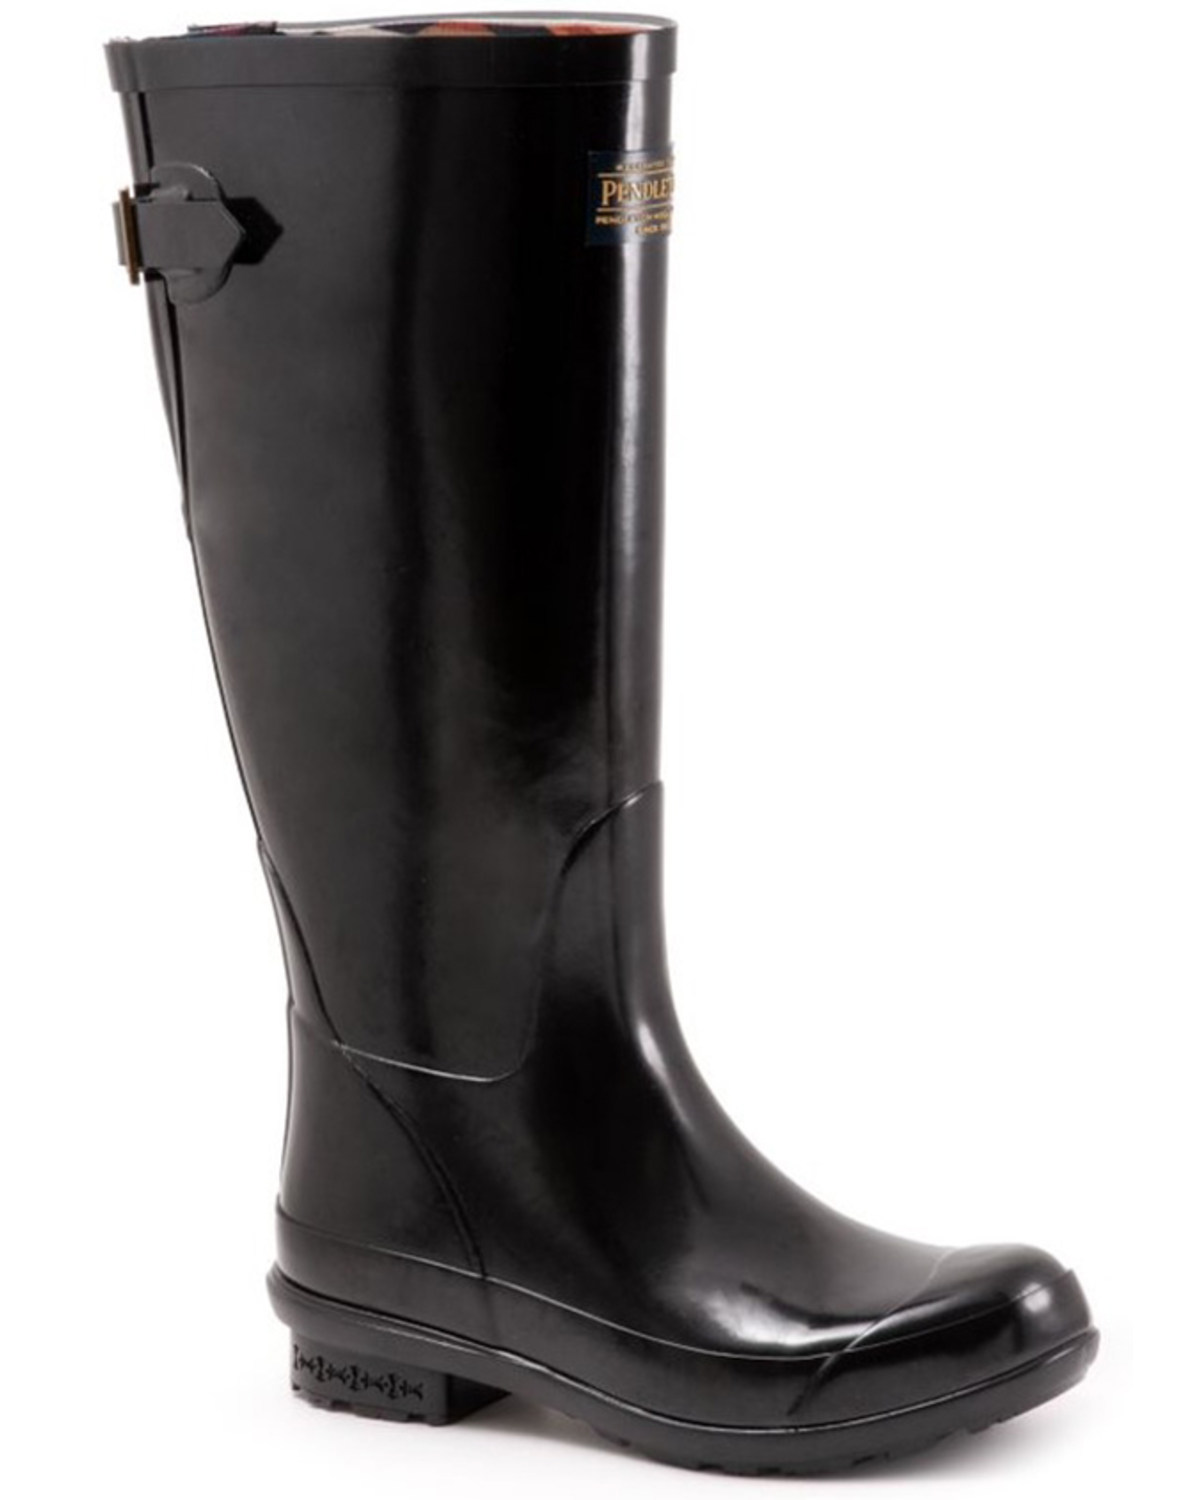 Pendleton Women's Gloss Tall Rain Boots